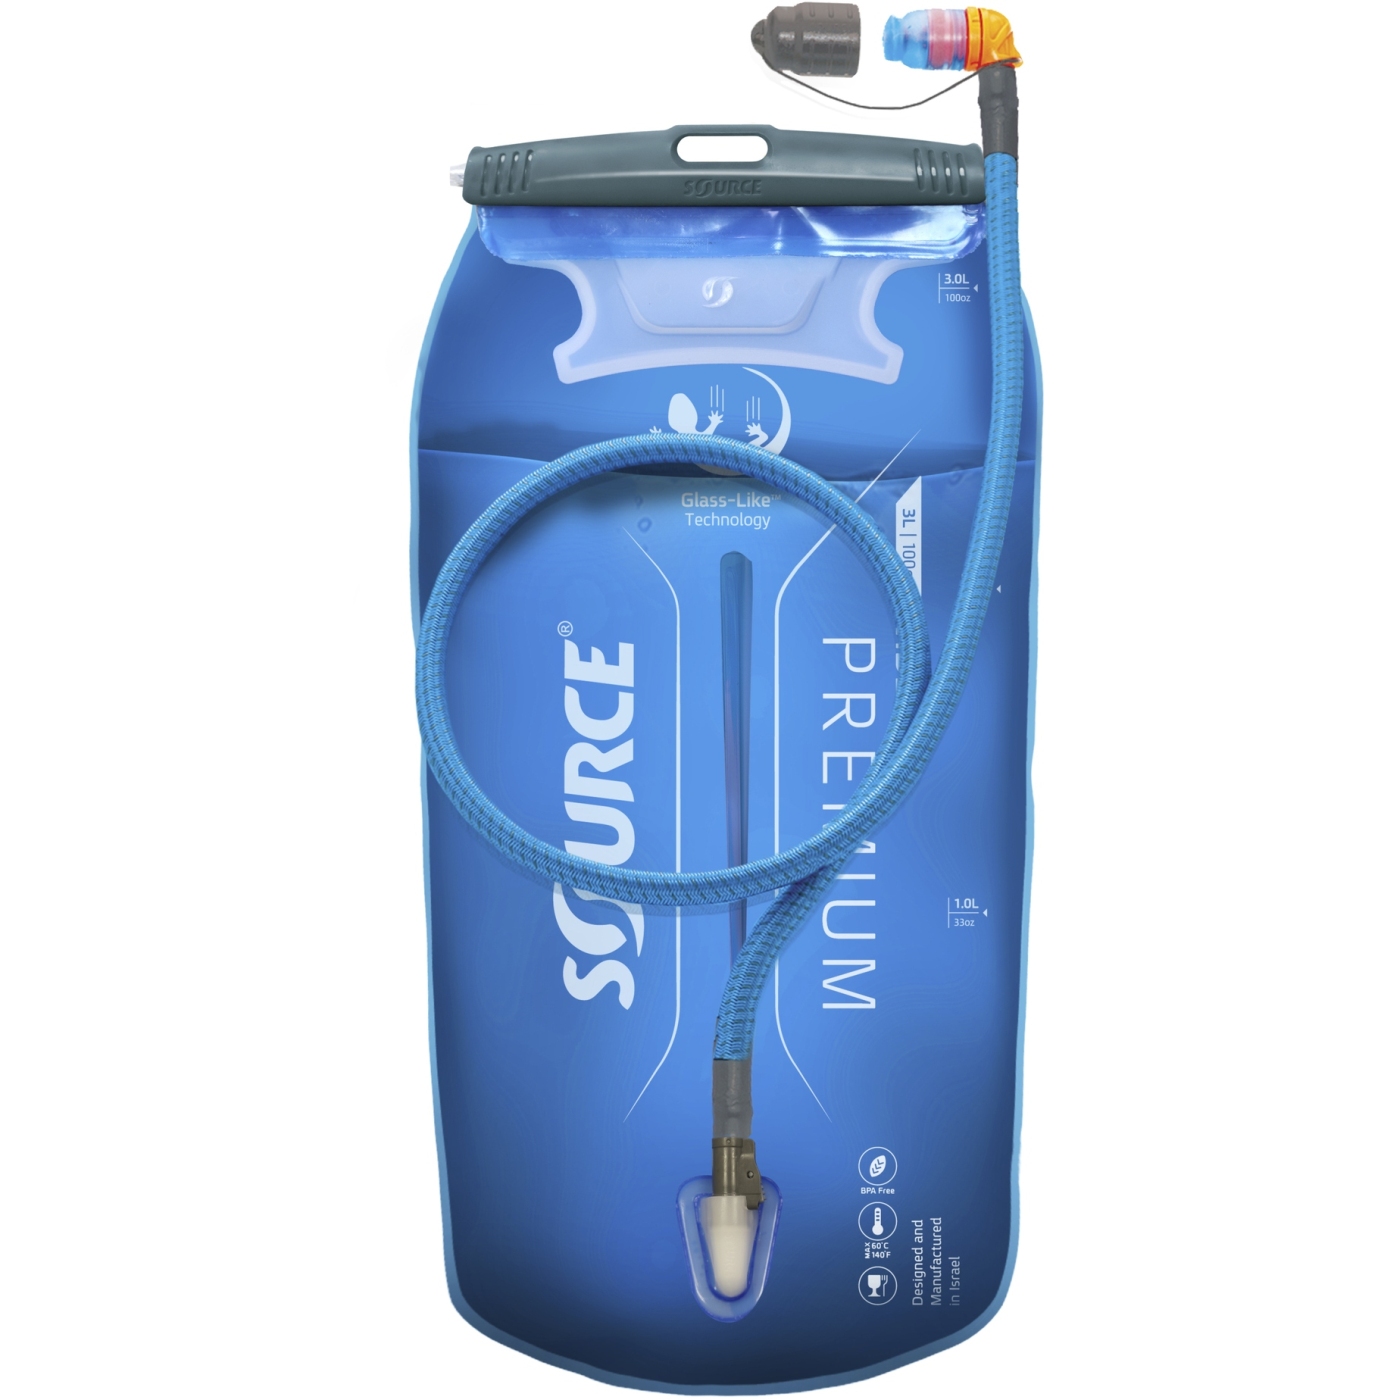 Productfoto van Source Widepac Premium Drinkzak 3 L - alpine blue